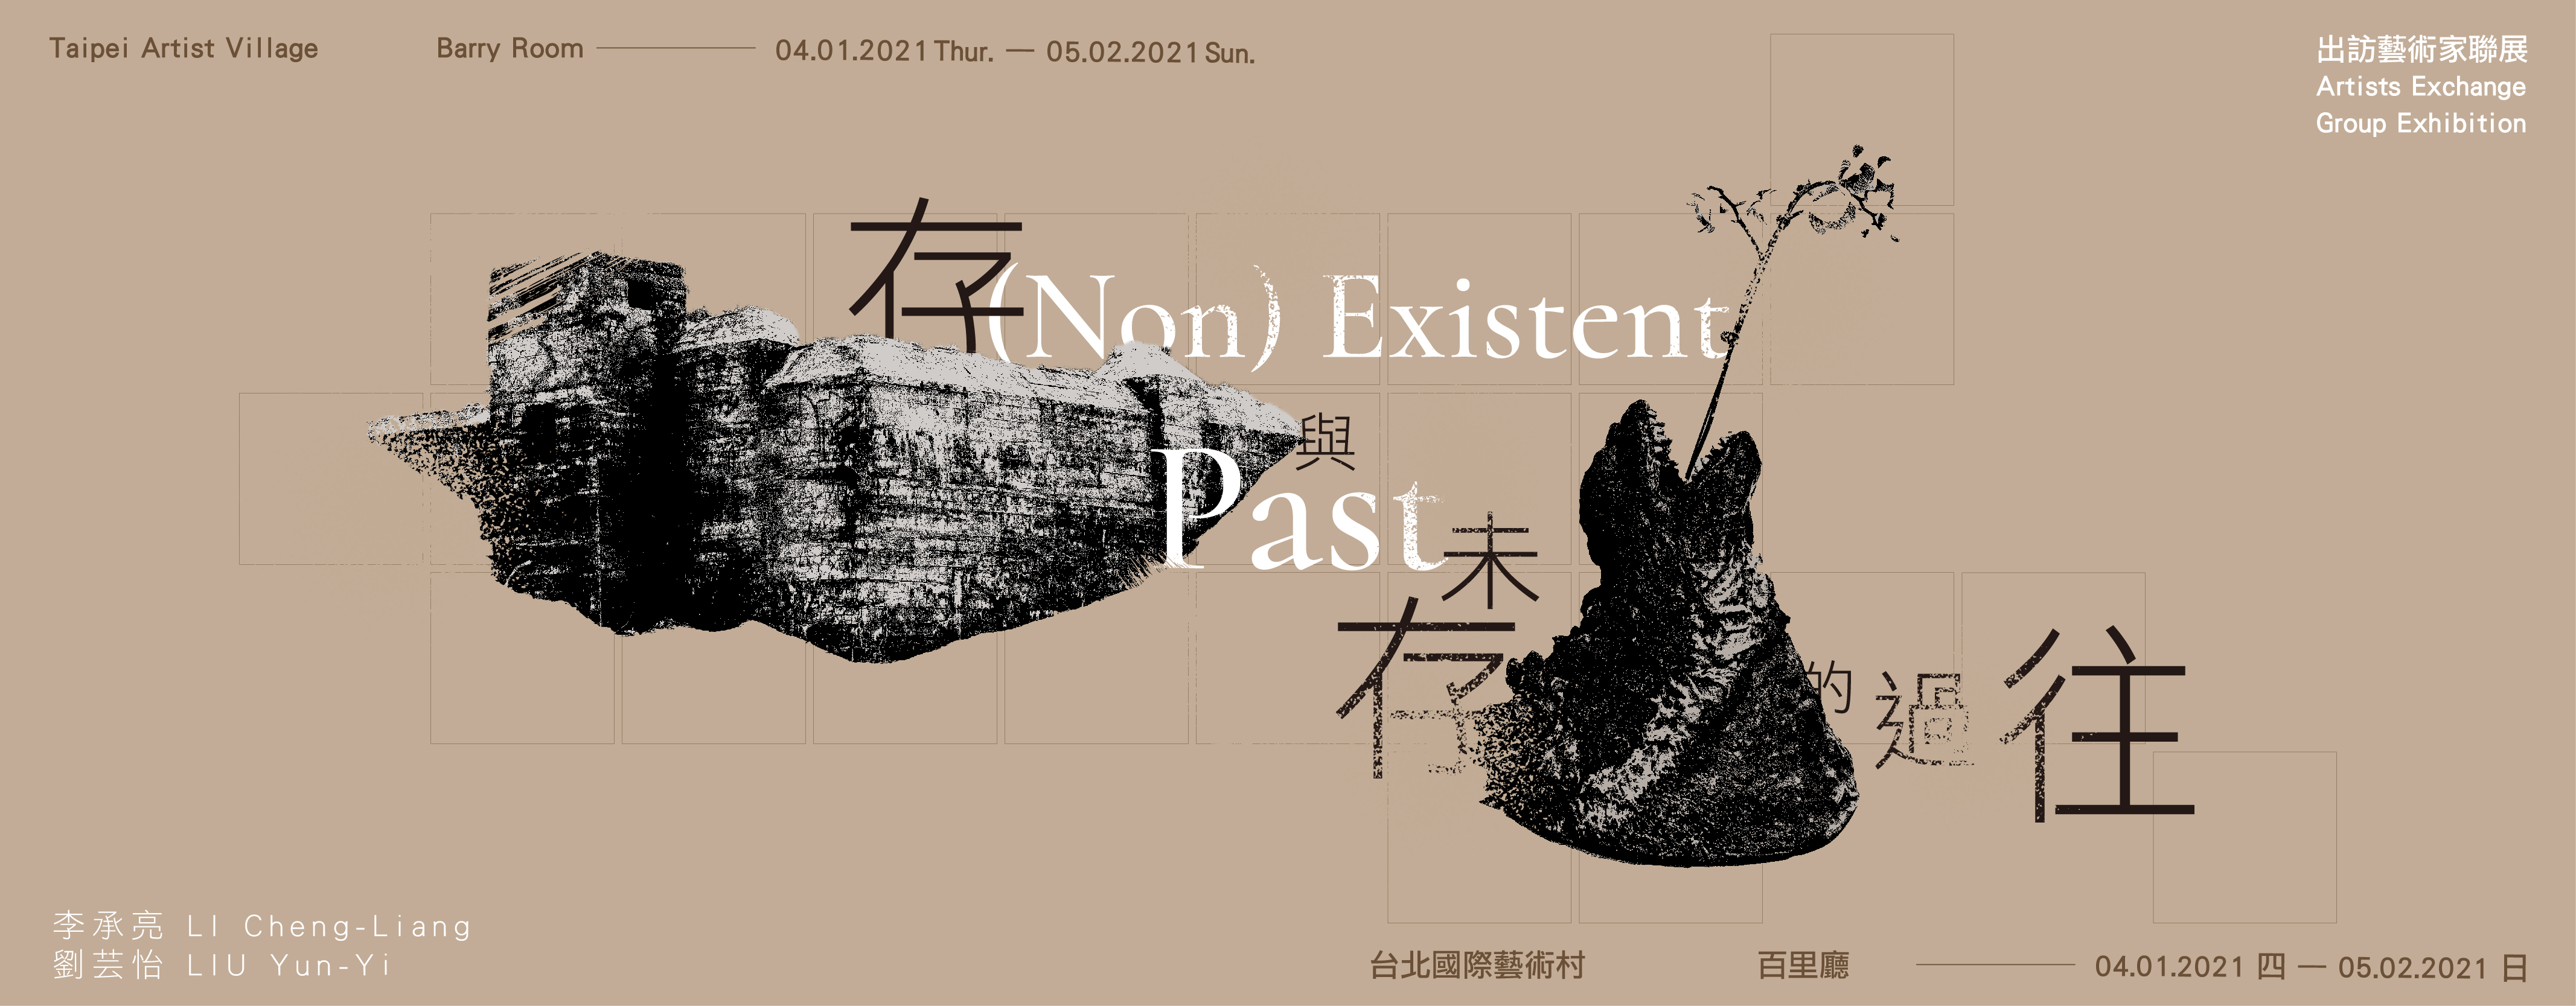 (Non) Existent Past －Artists Exchange Group Exhibition